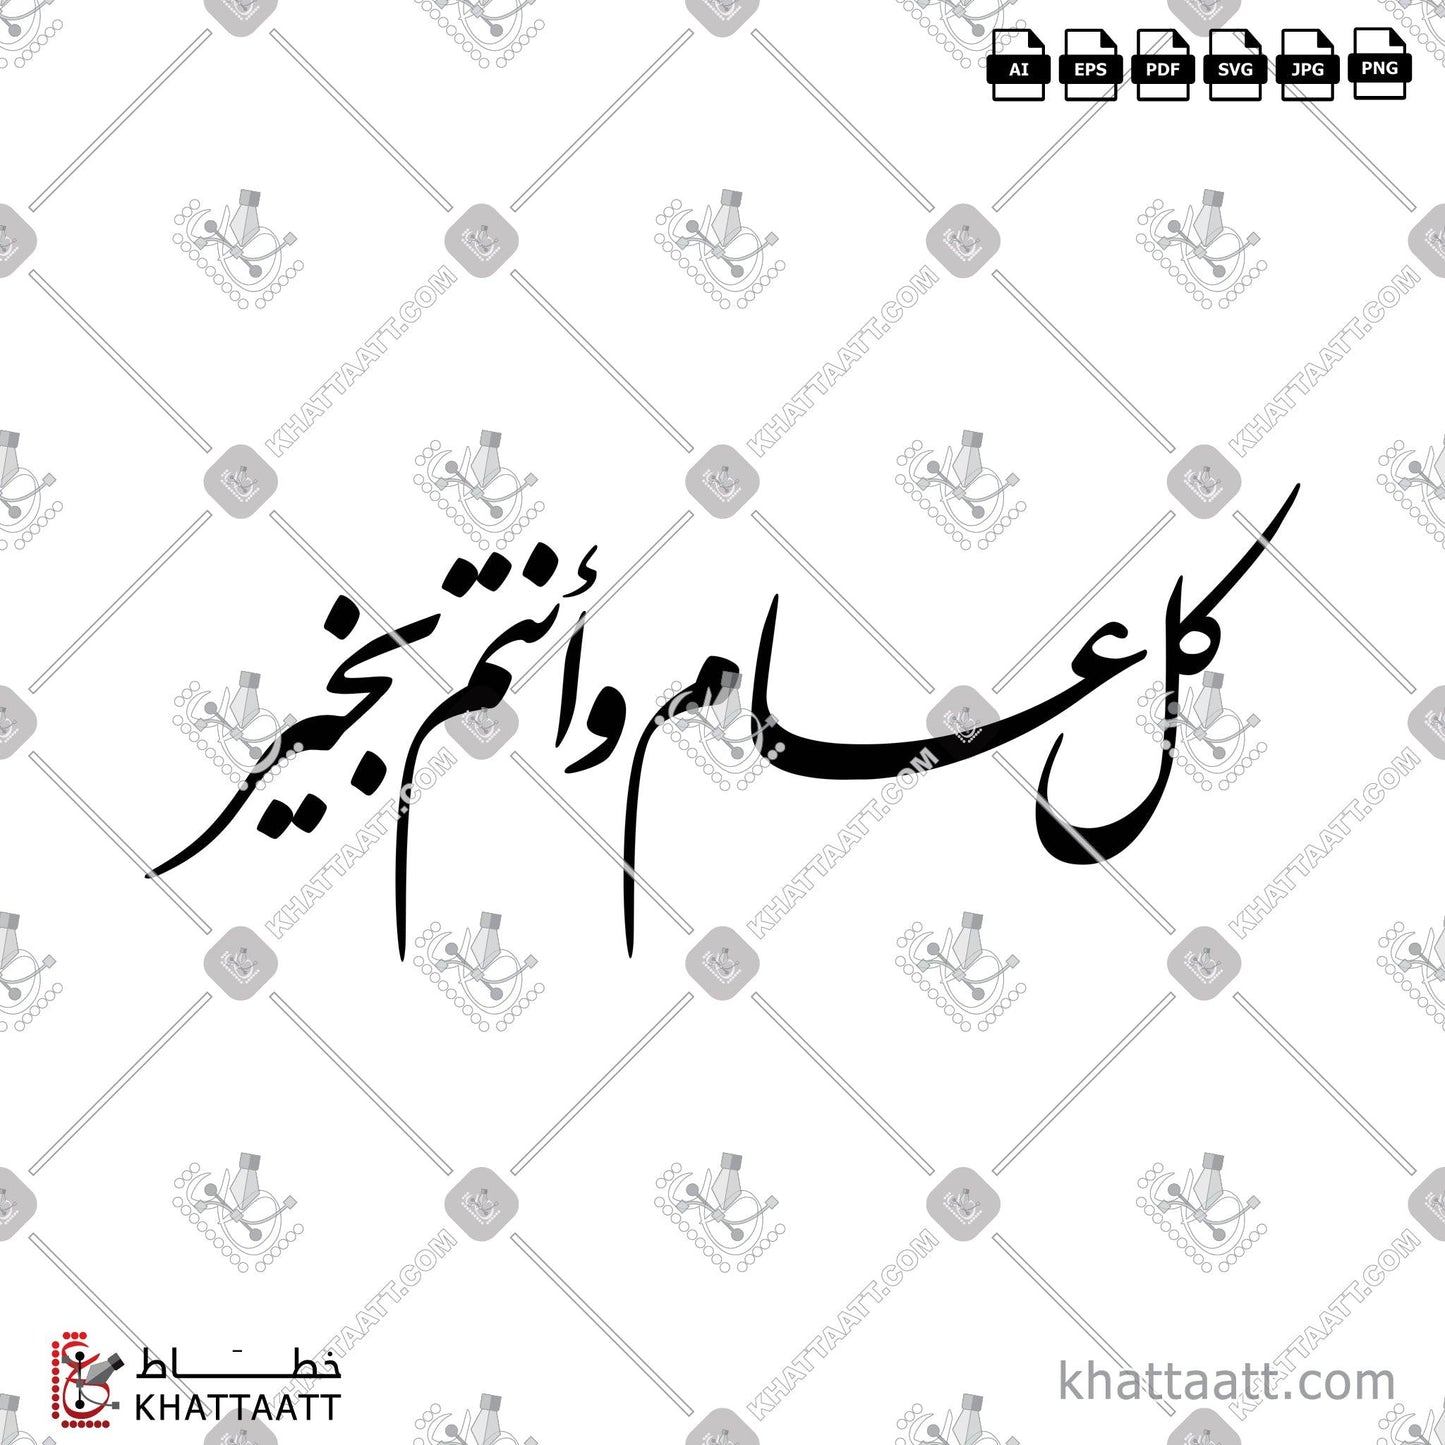 Download Arabic Calligraphy of كل عام وأنتم بخير in Farsi - الخط الفارسي in vector and .png